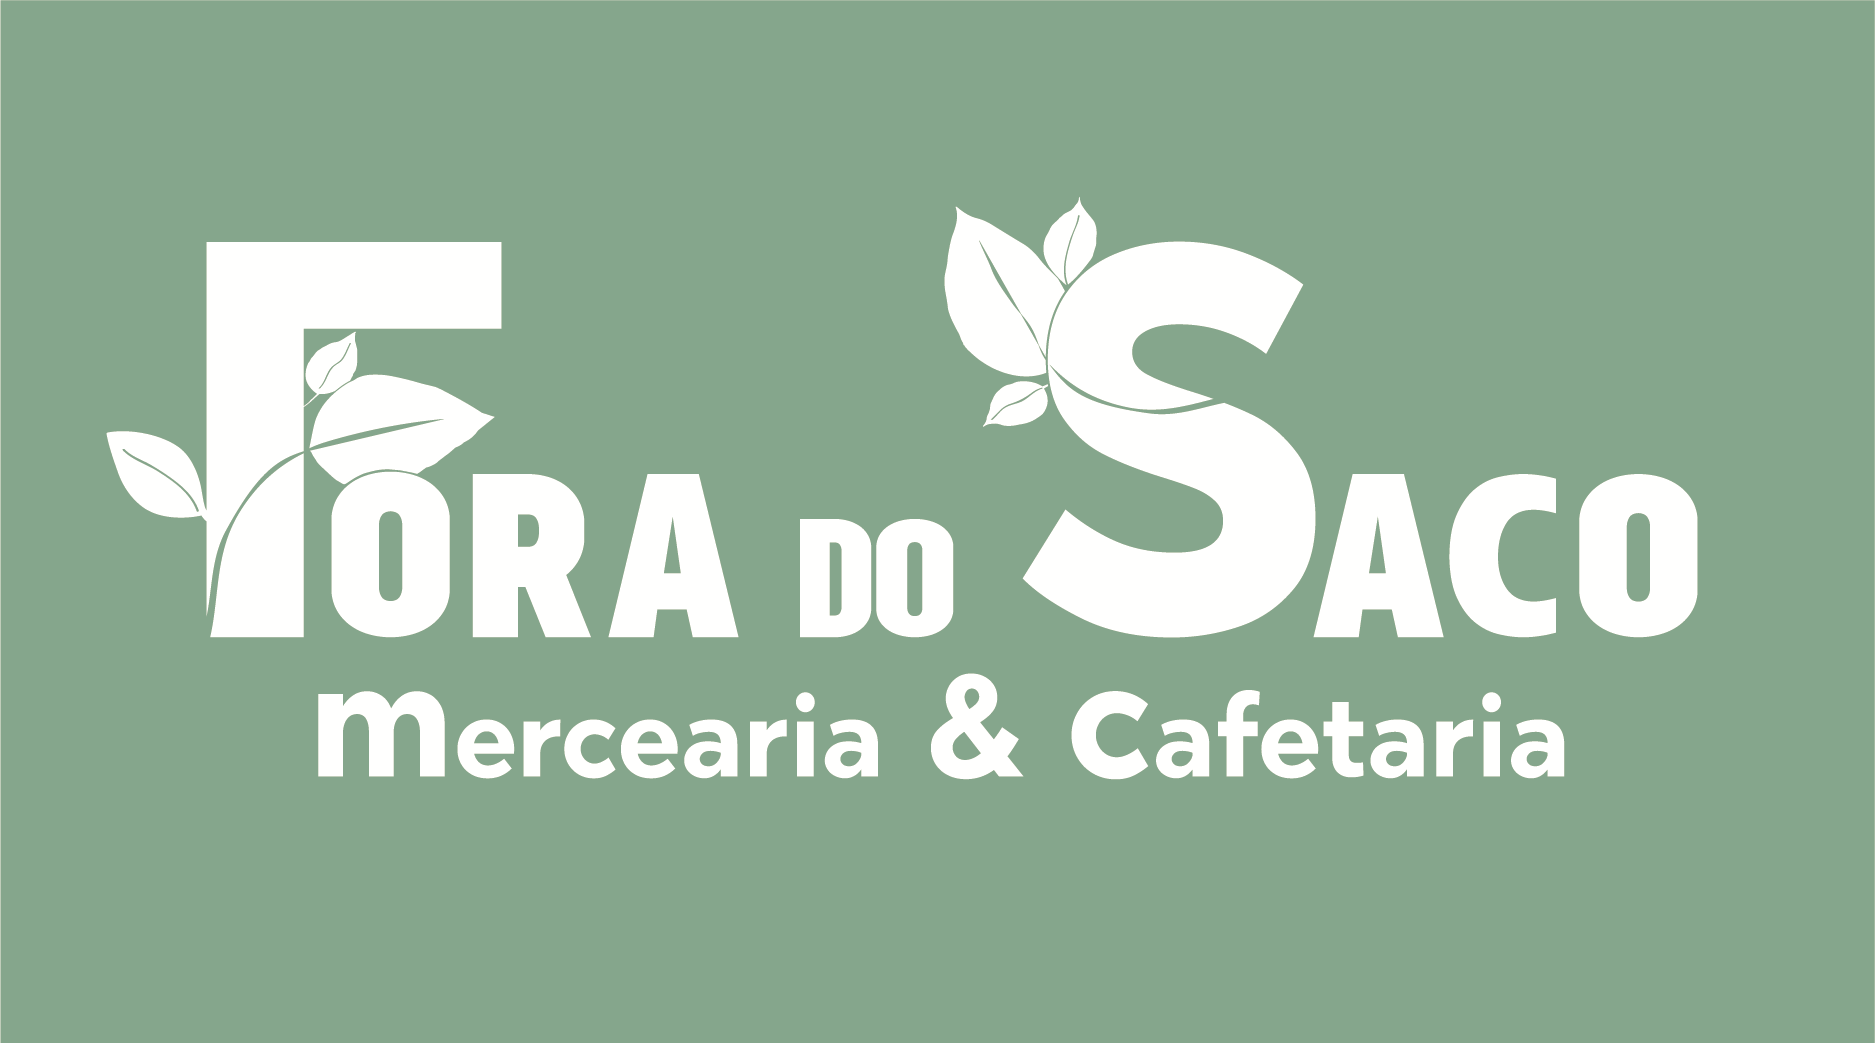 Fora do Saco – Mercearia & Cafetaria